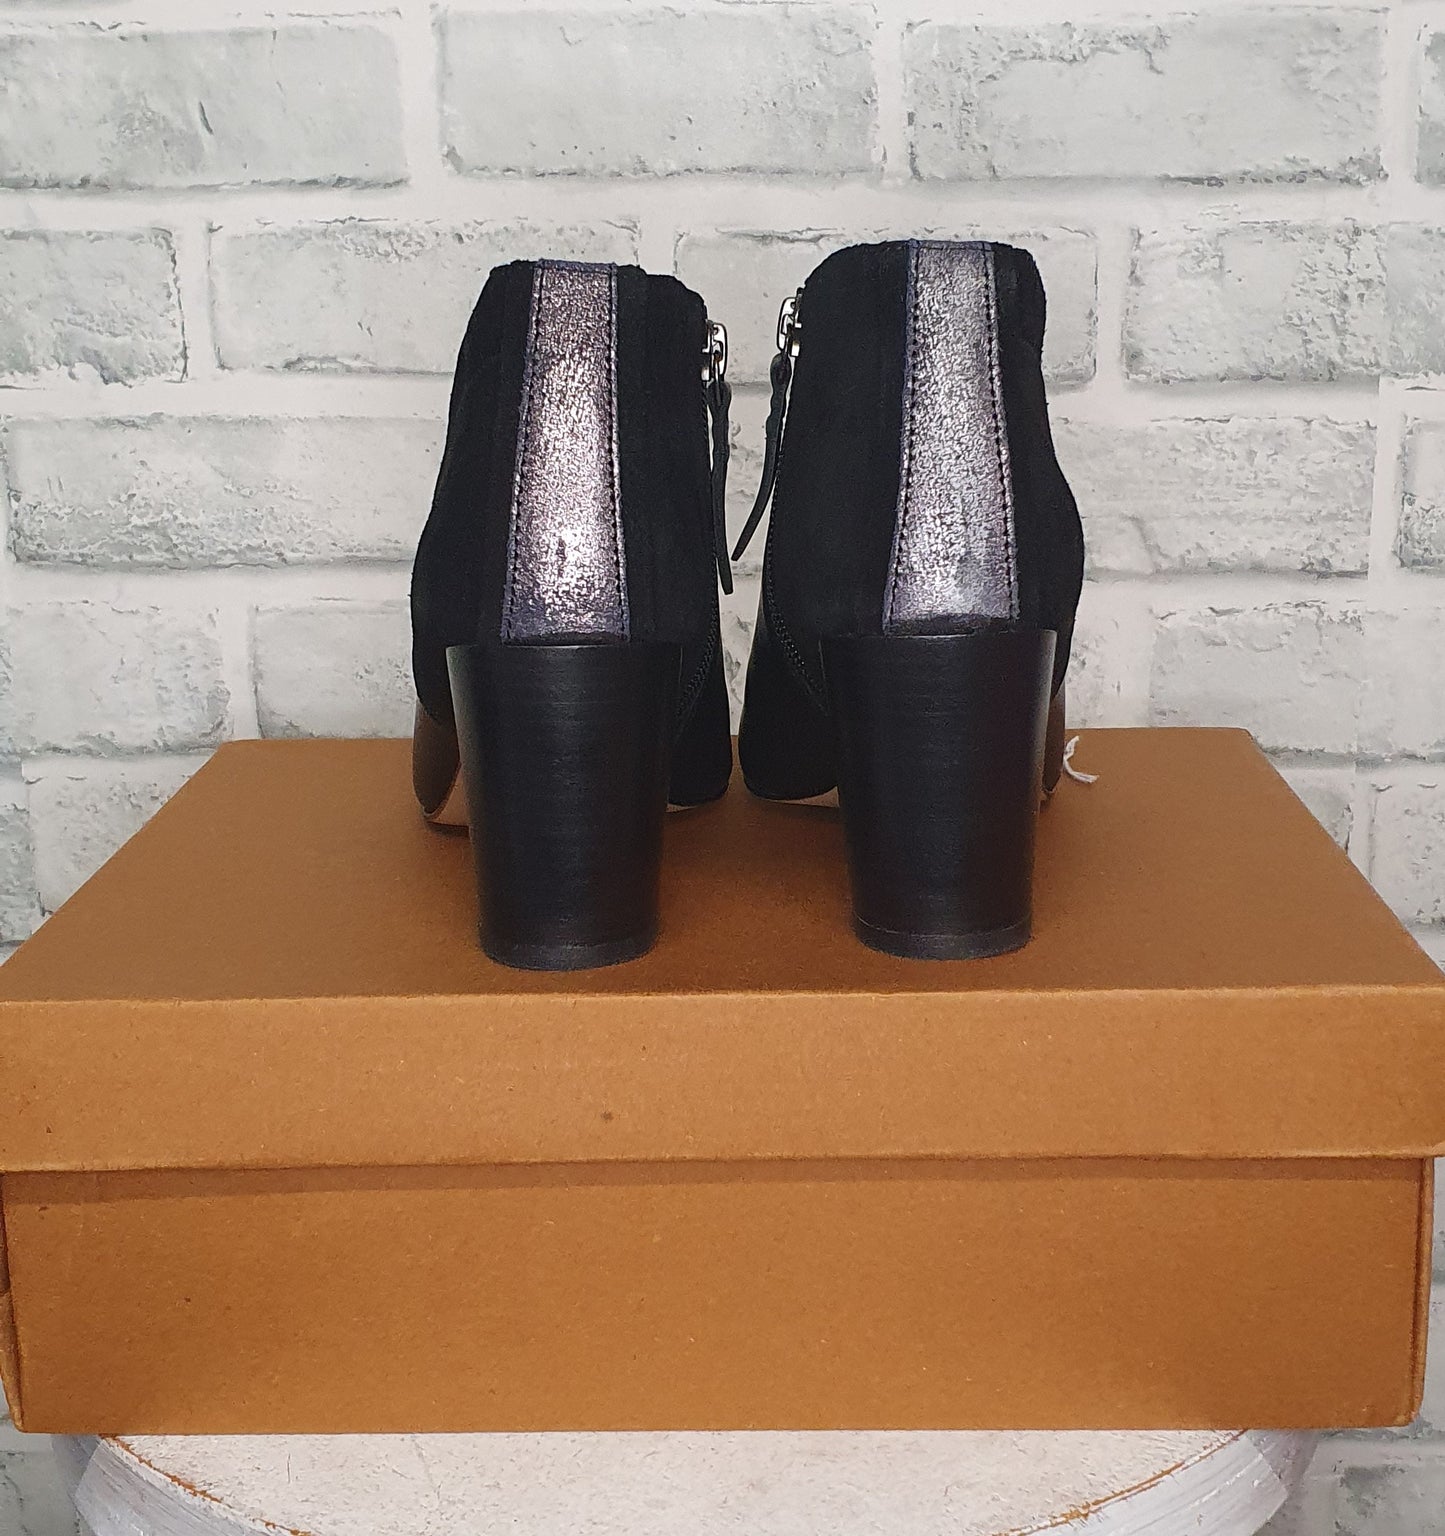 White Stuff Lacey Leather Shoe Boots Pure Black Size 6 BNIB